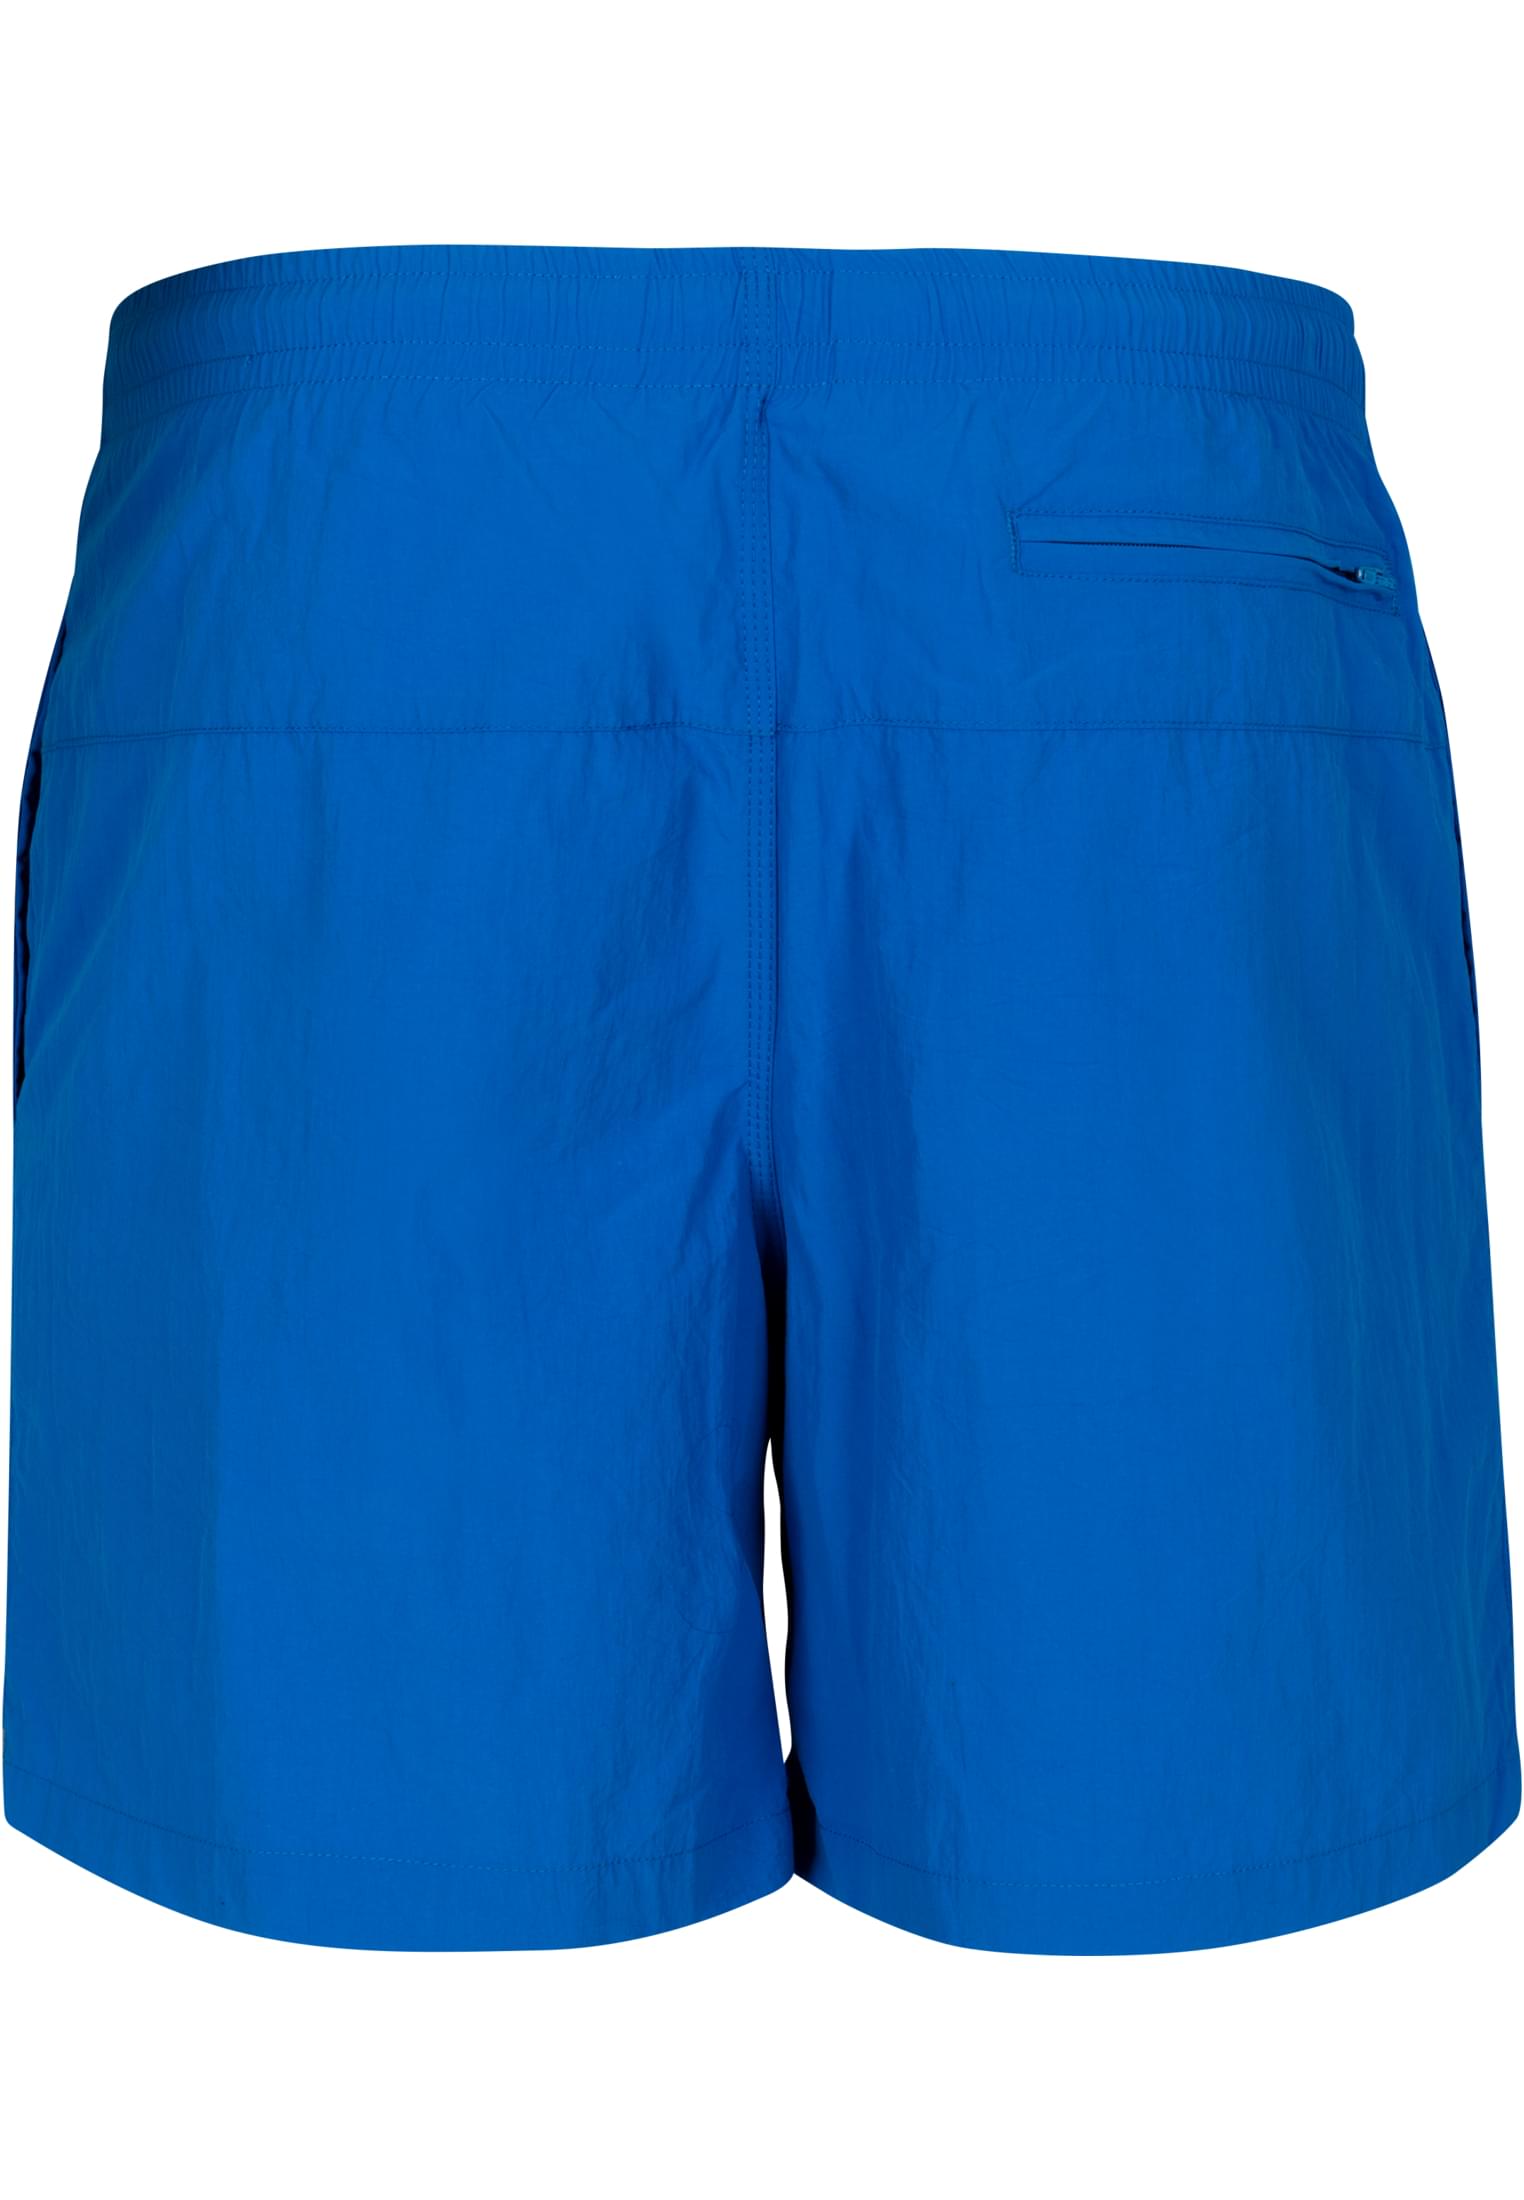 Plus Size Block Swim Shorts in Farbe cobalt blue